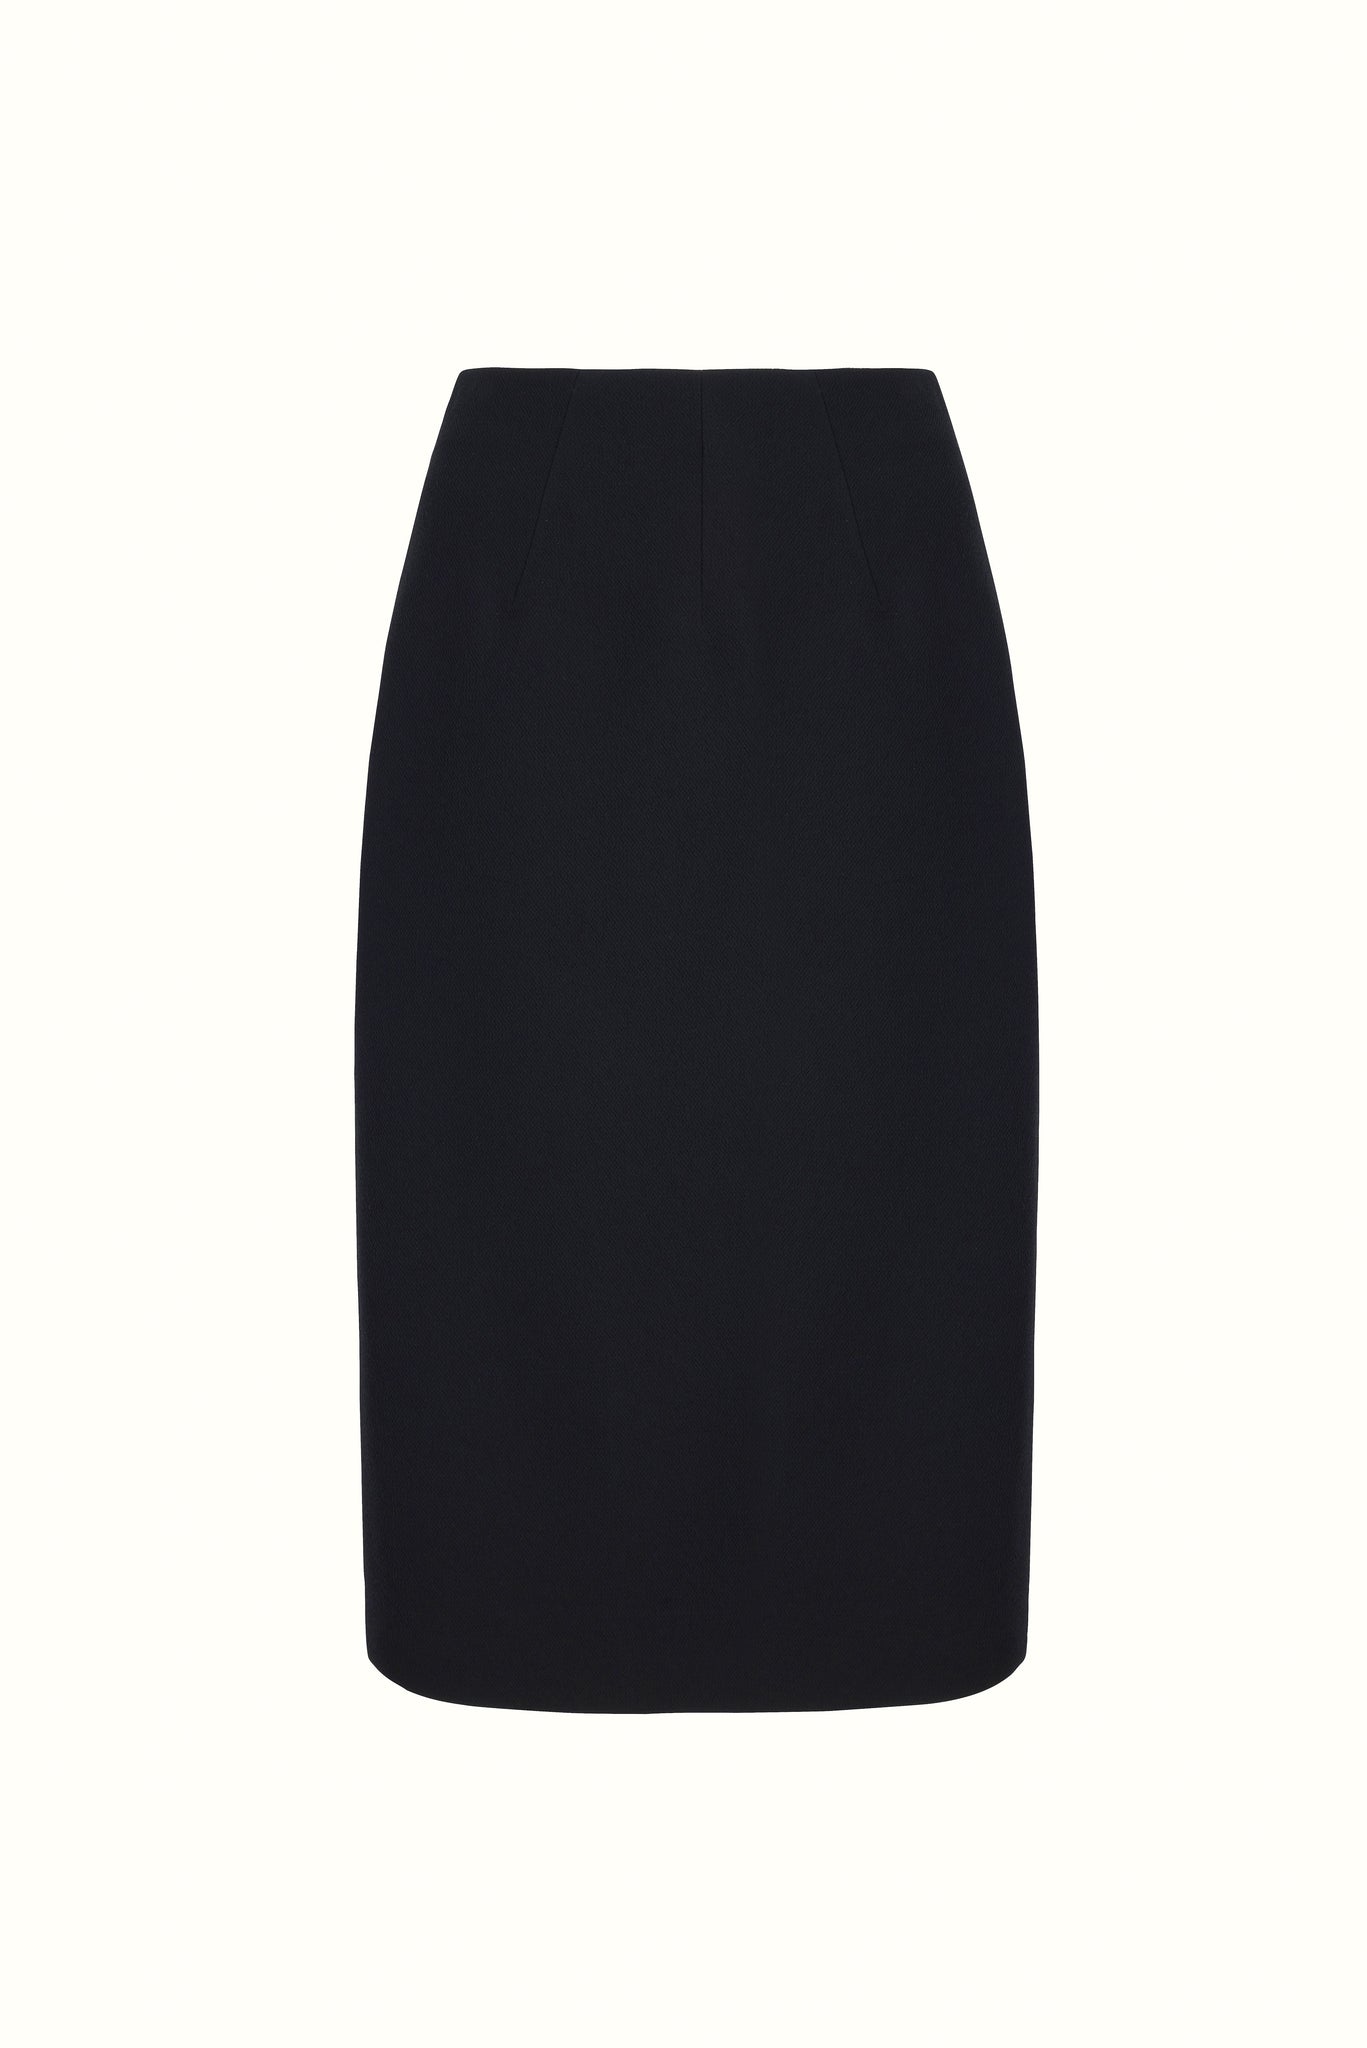 Lorinda Pencil Skirt In Black Double Crepe - Emilia Wickstead